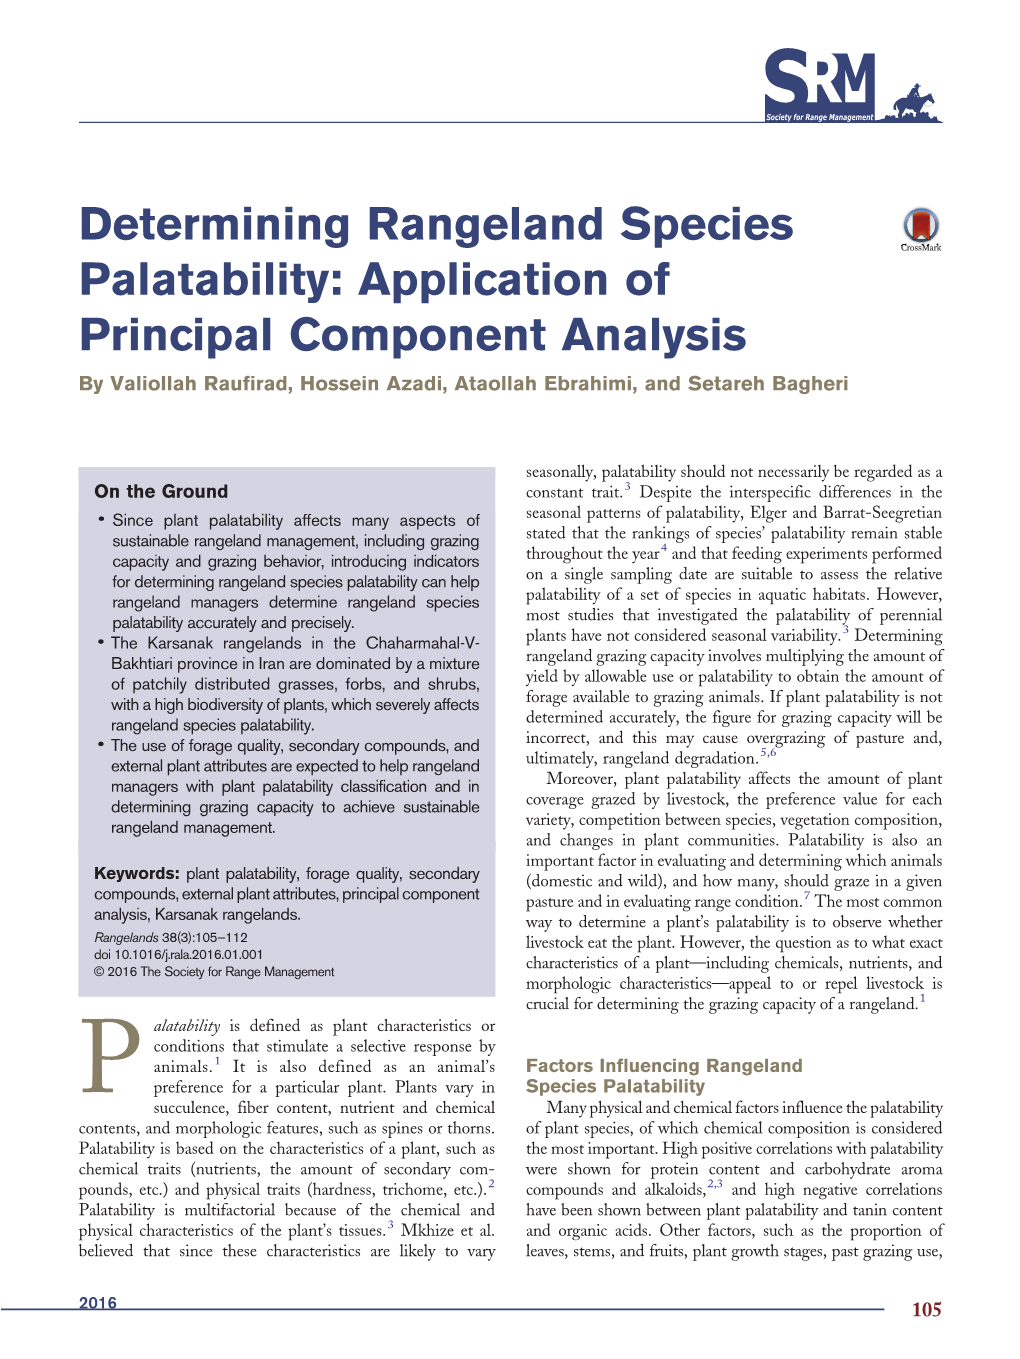 Determining Rangeland Species Palatability: Application of Principal Component Analysis by Valiollah Raufirad, Hossein Azadi, Ataollah Ebrahimi, and Setareh Bagheri